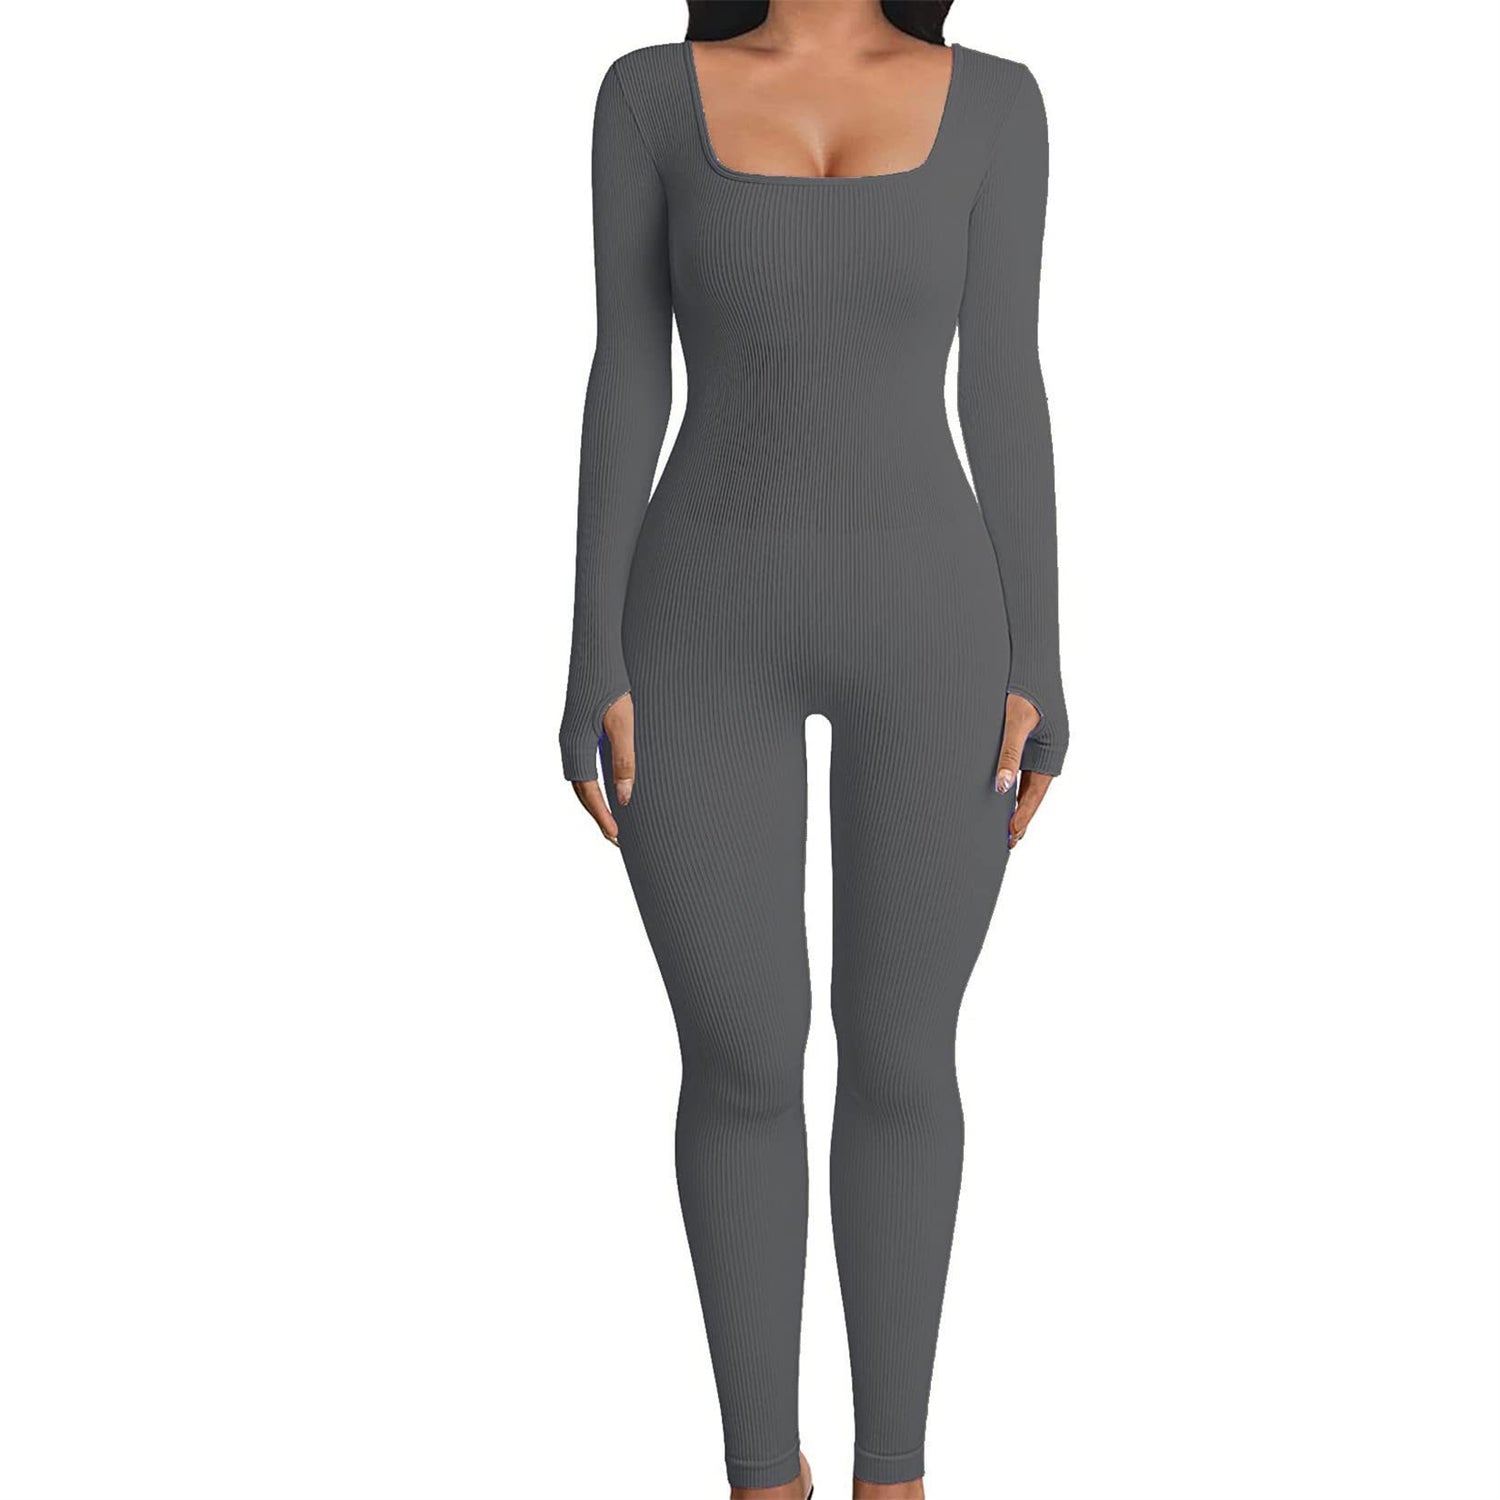 Jumpsuit  | Urban Chic: One-Piece Thread Bodysuit in Dazzling Colors – Sizes S to 3XL | 2XL |  Dark Gray| thecurvestory.myshopify.com